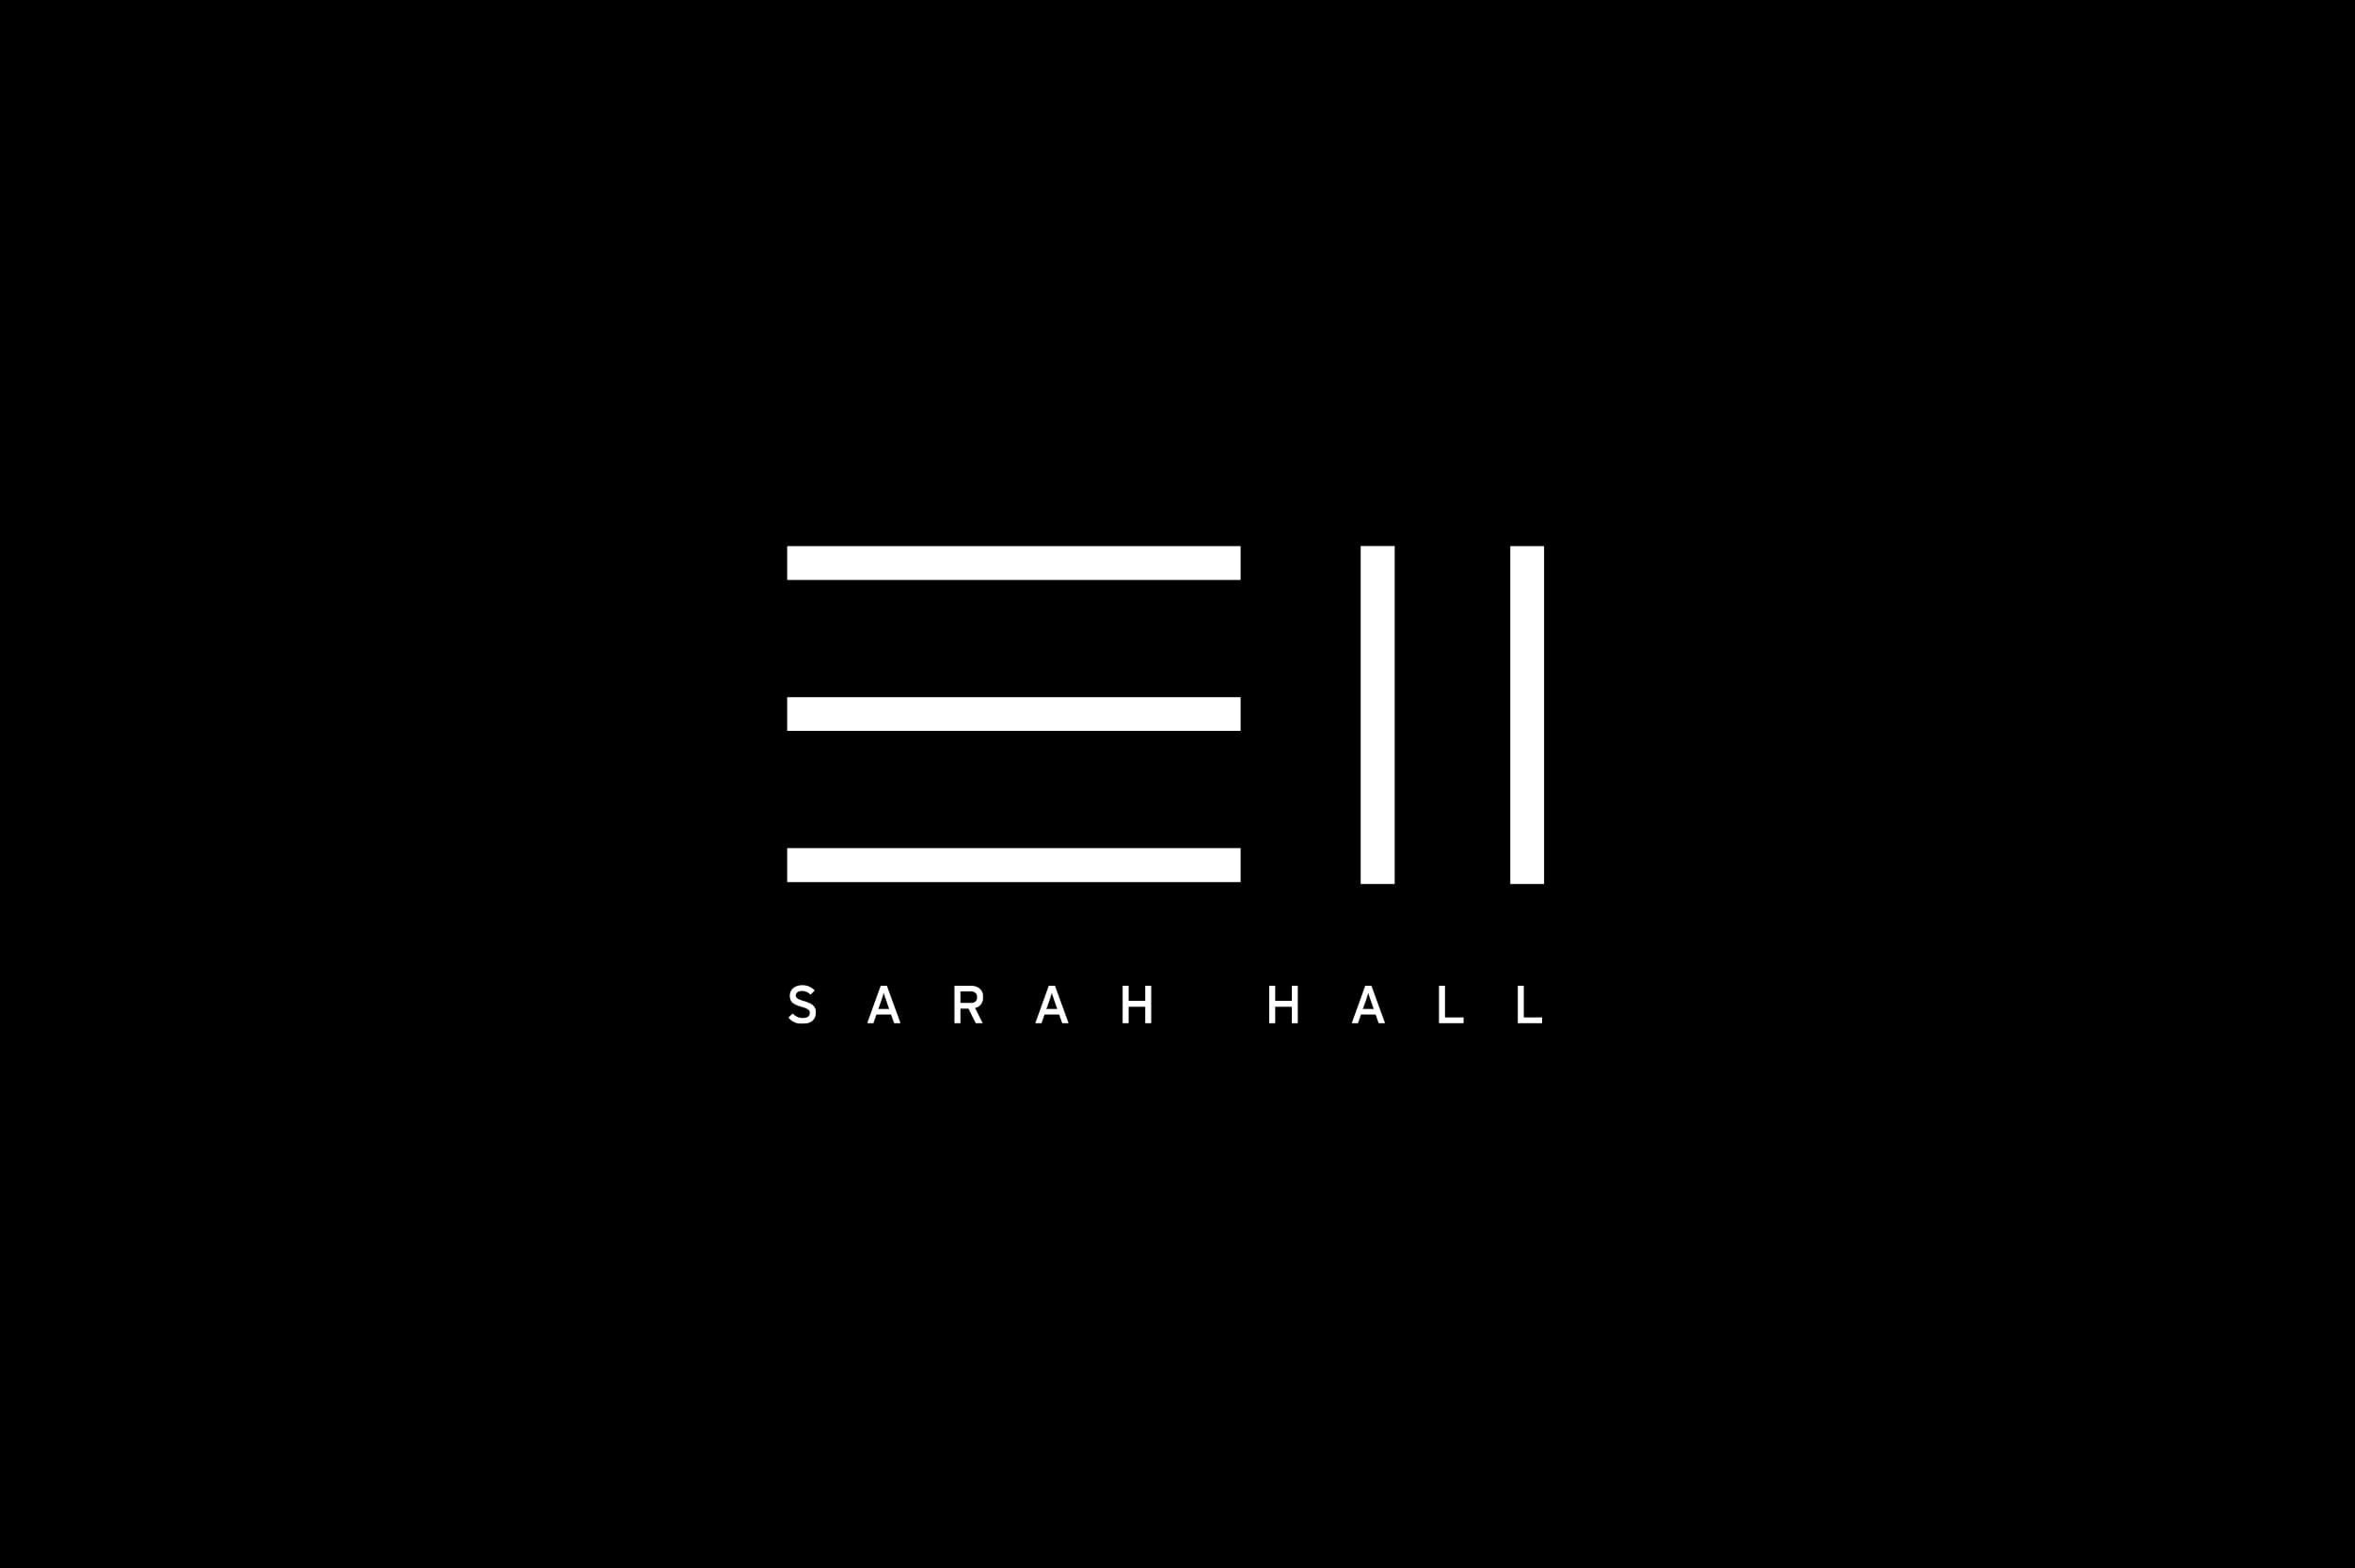 Sarah Hall